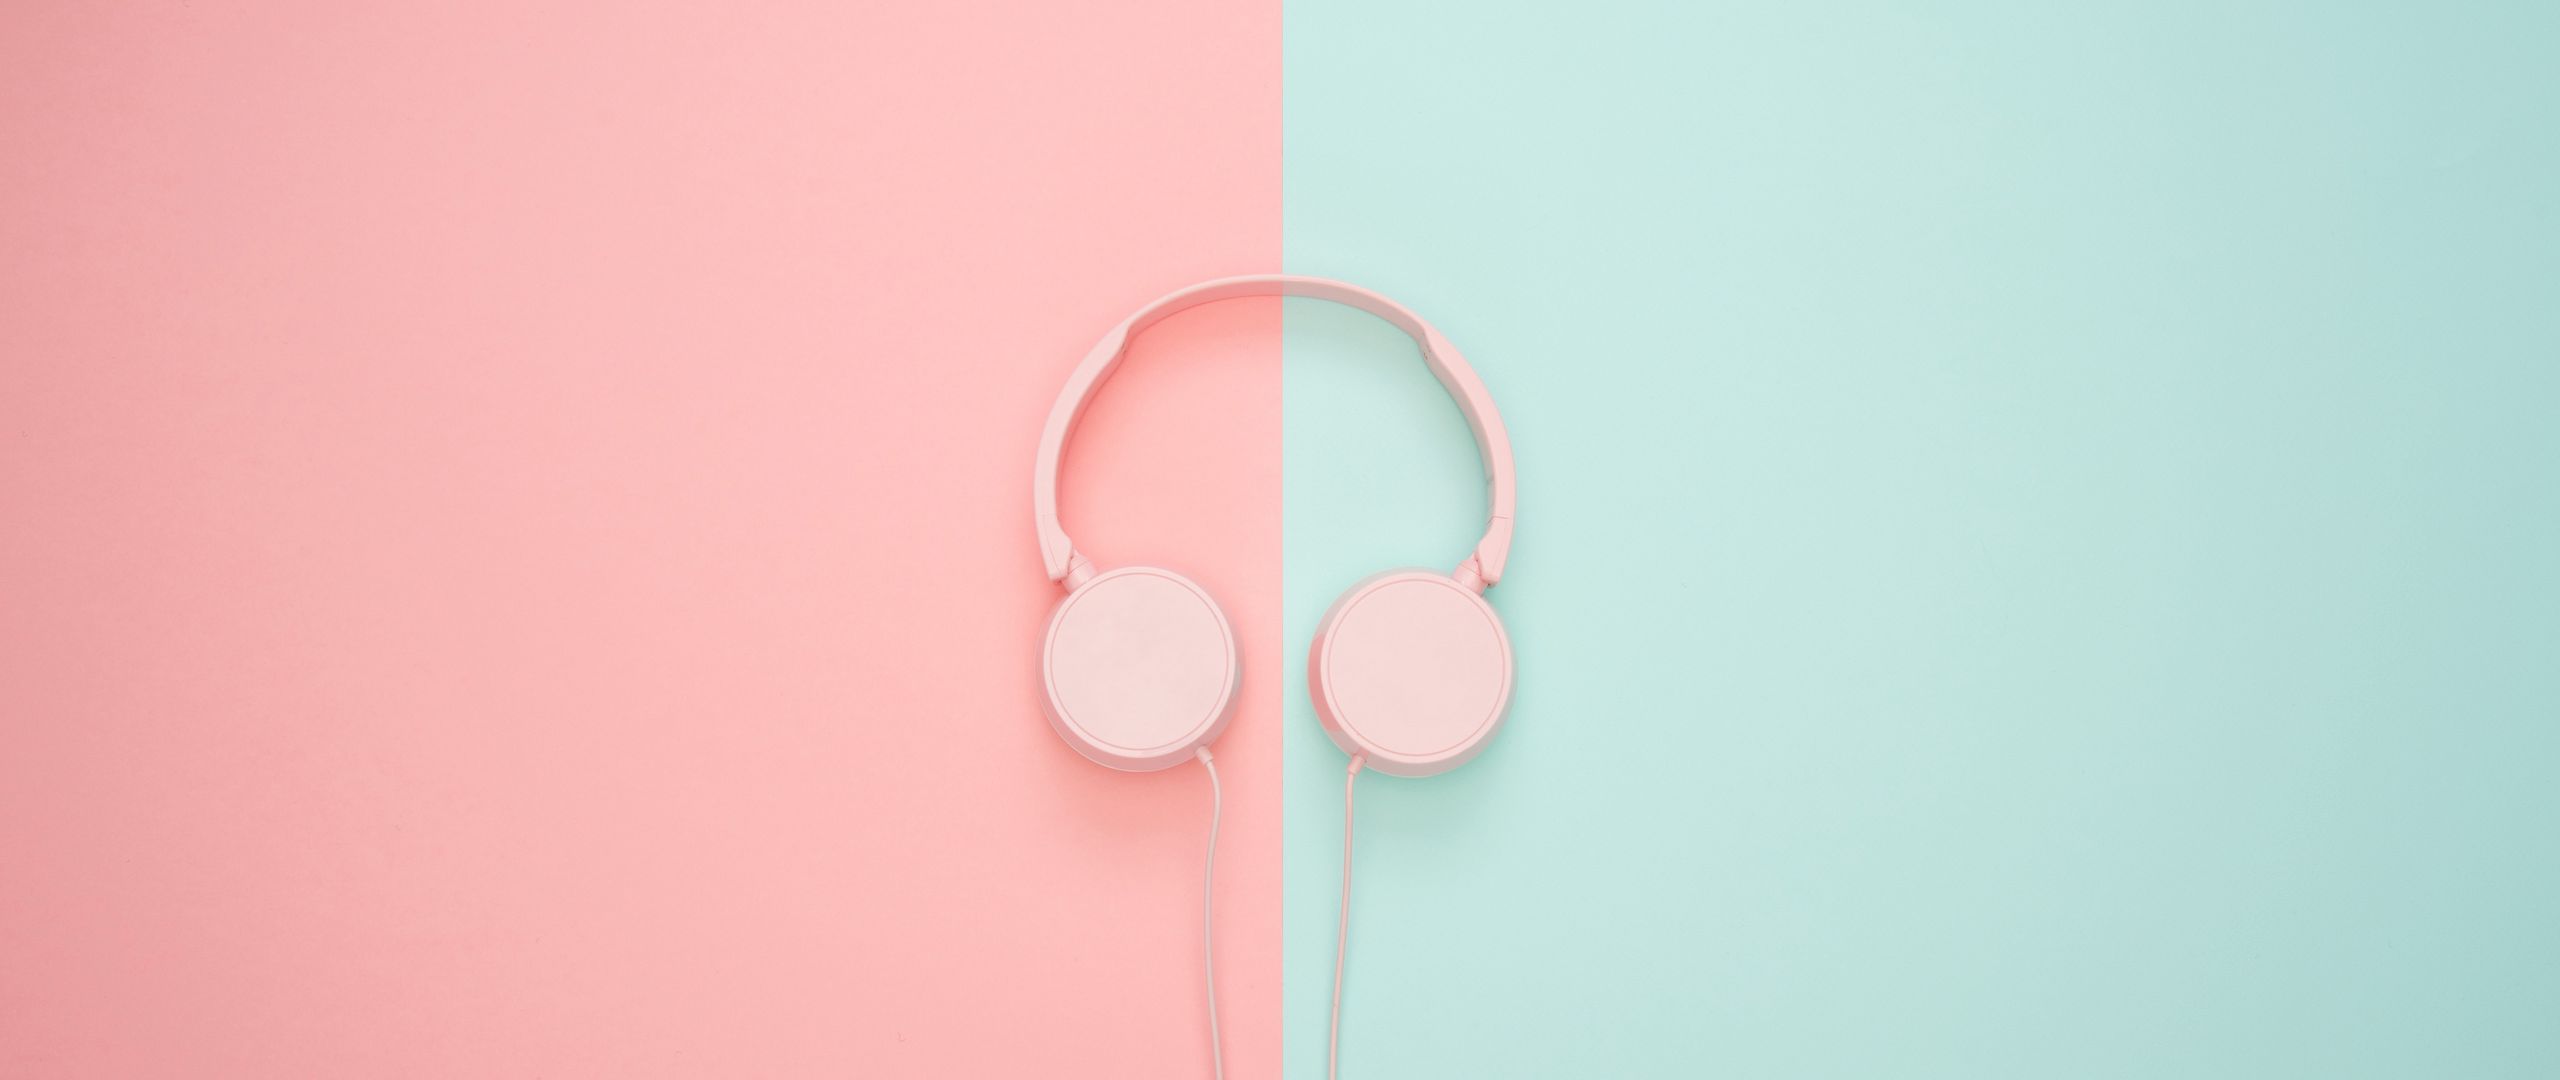 Download wallpaper 2560x1080 headphones, minimalism, pink, pastel dual wide 1080p HD background